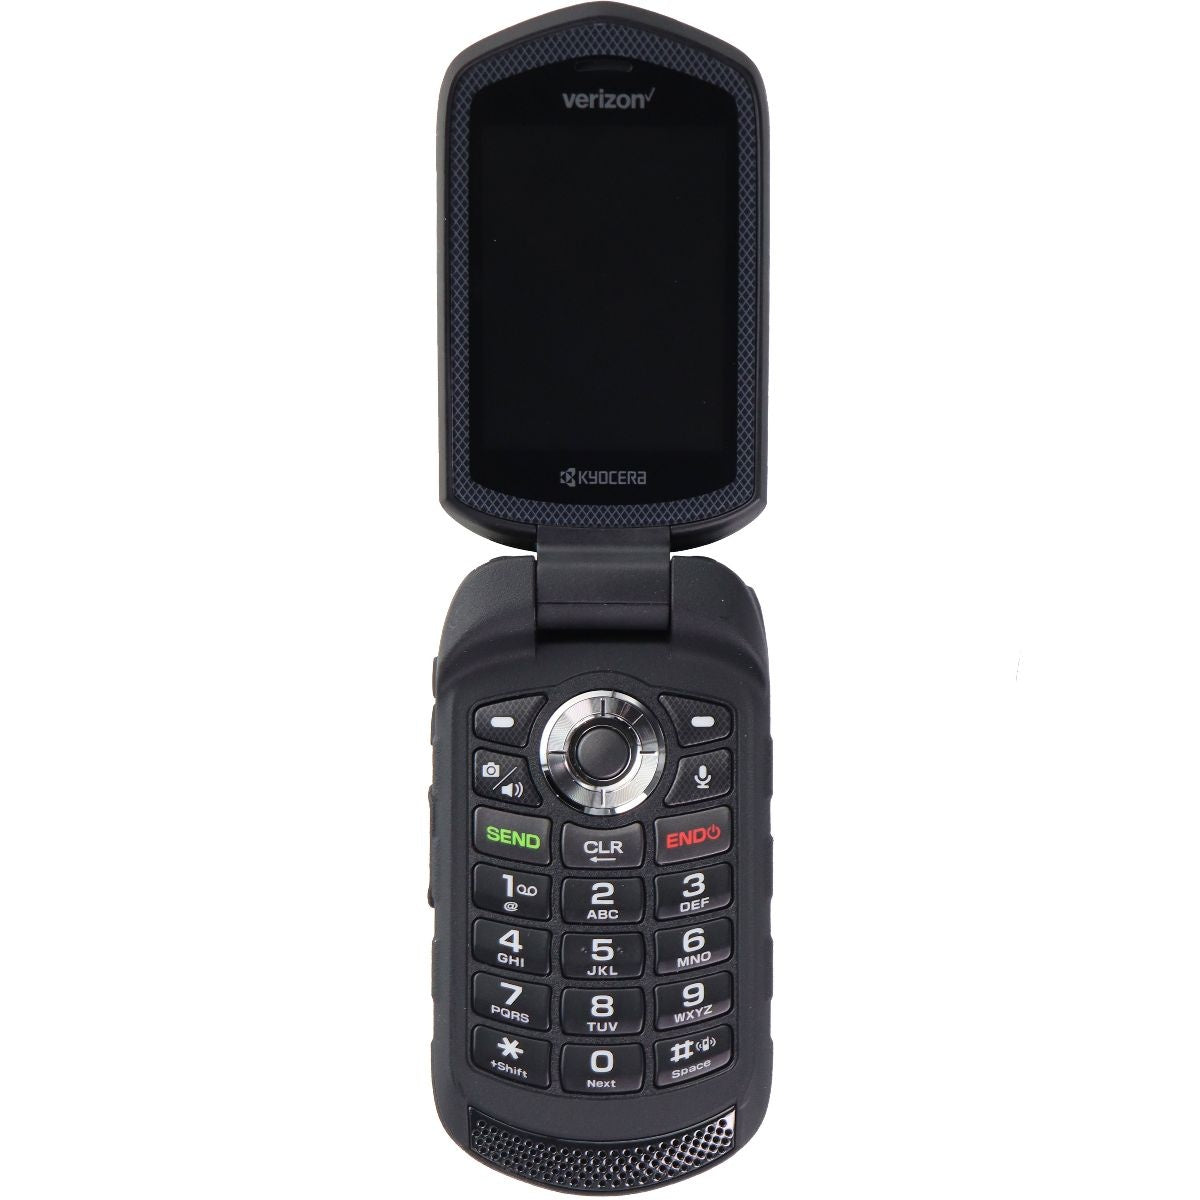 Kyocera DuraXV LTE Flip Phone (E4610) Verizon Only - 16GB / Black Cell Phones & Smartphones Kyocera    - Simple Cell Bulk Wholesale Pricing - USA Seller